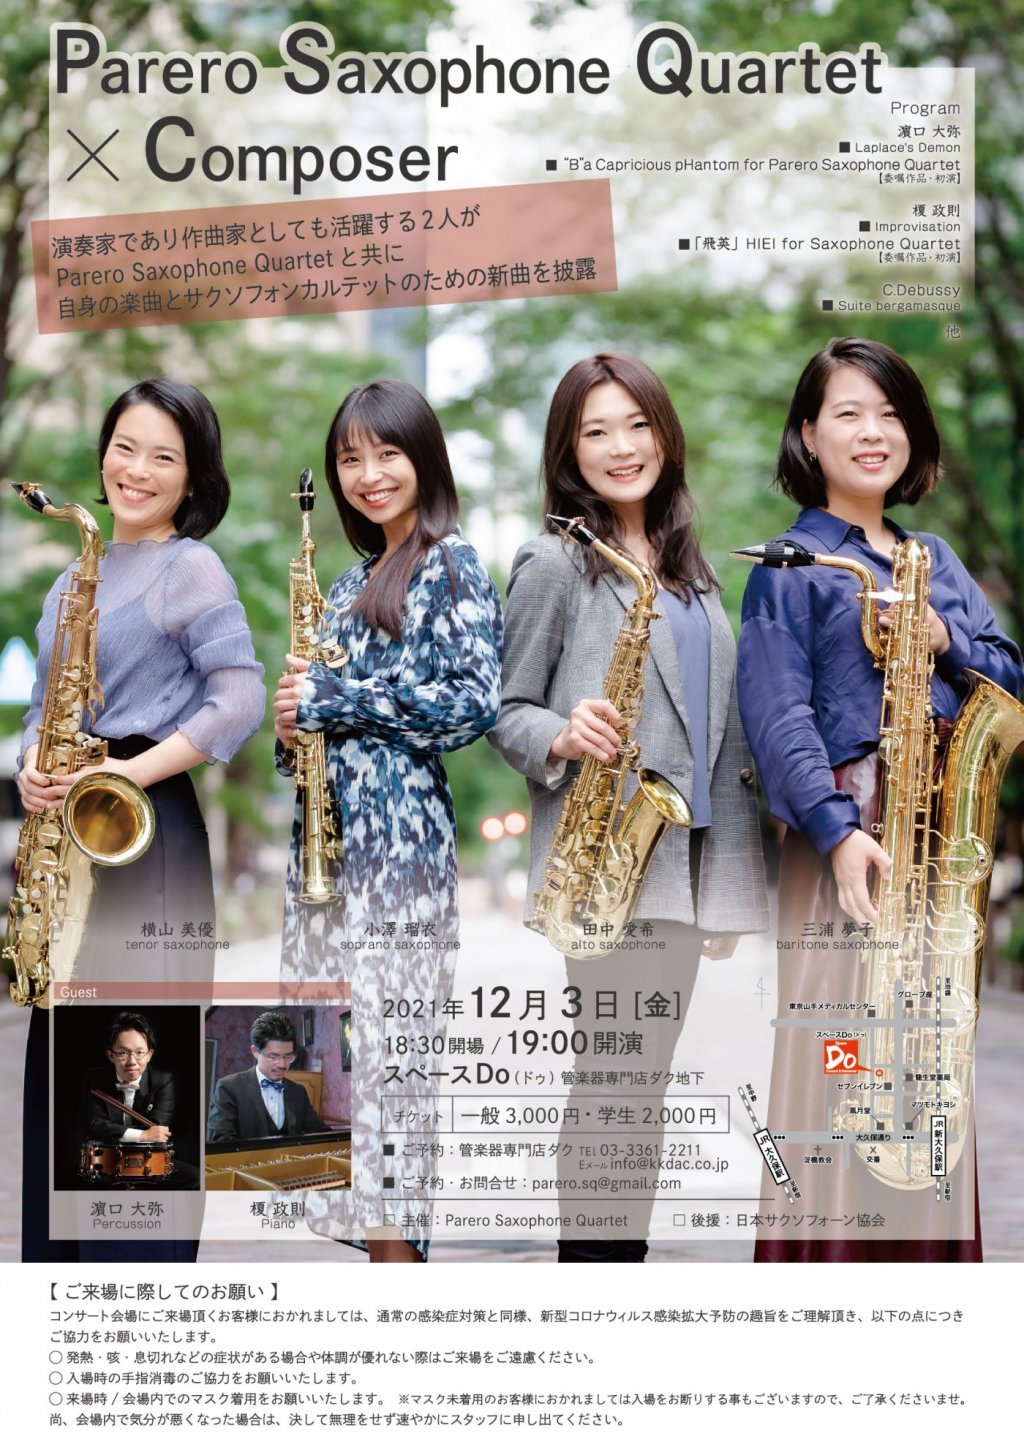 Parero Saxophone Quartet x Composer